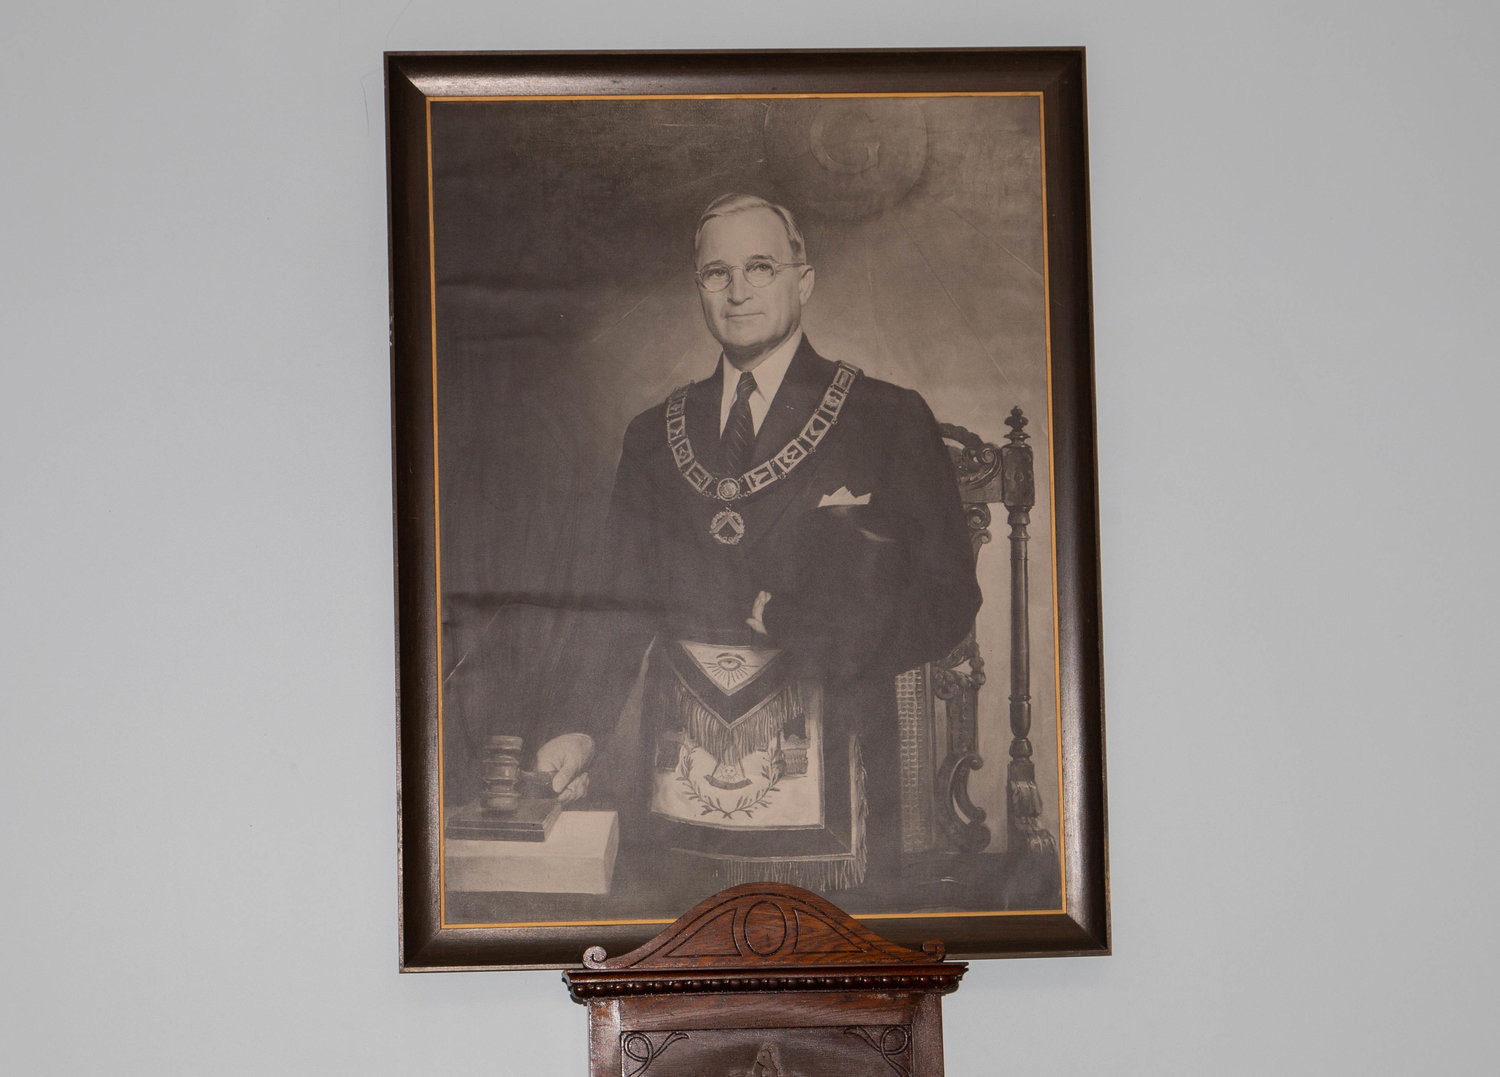 Portrait of Harry S. Truman from the Milton Masonic Lodge